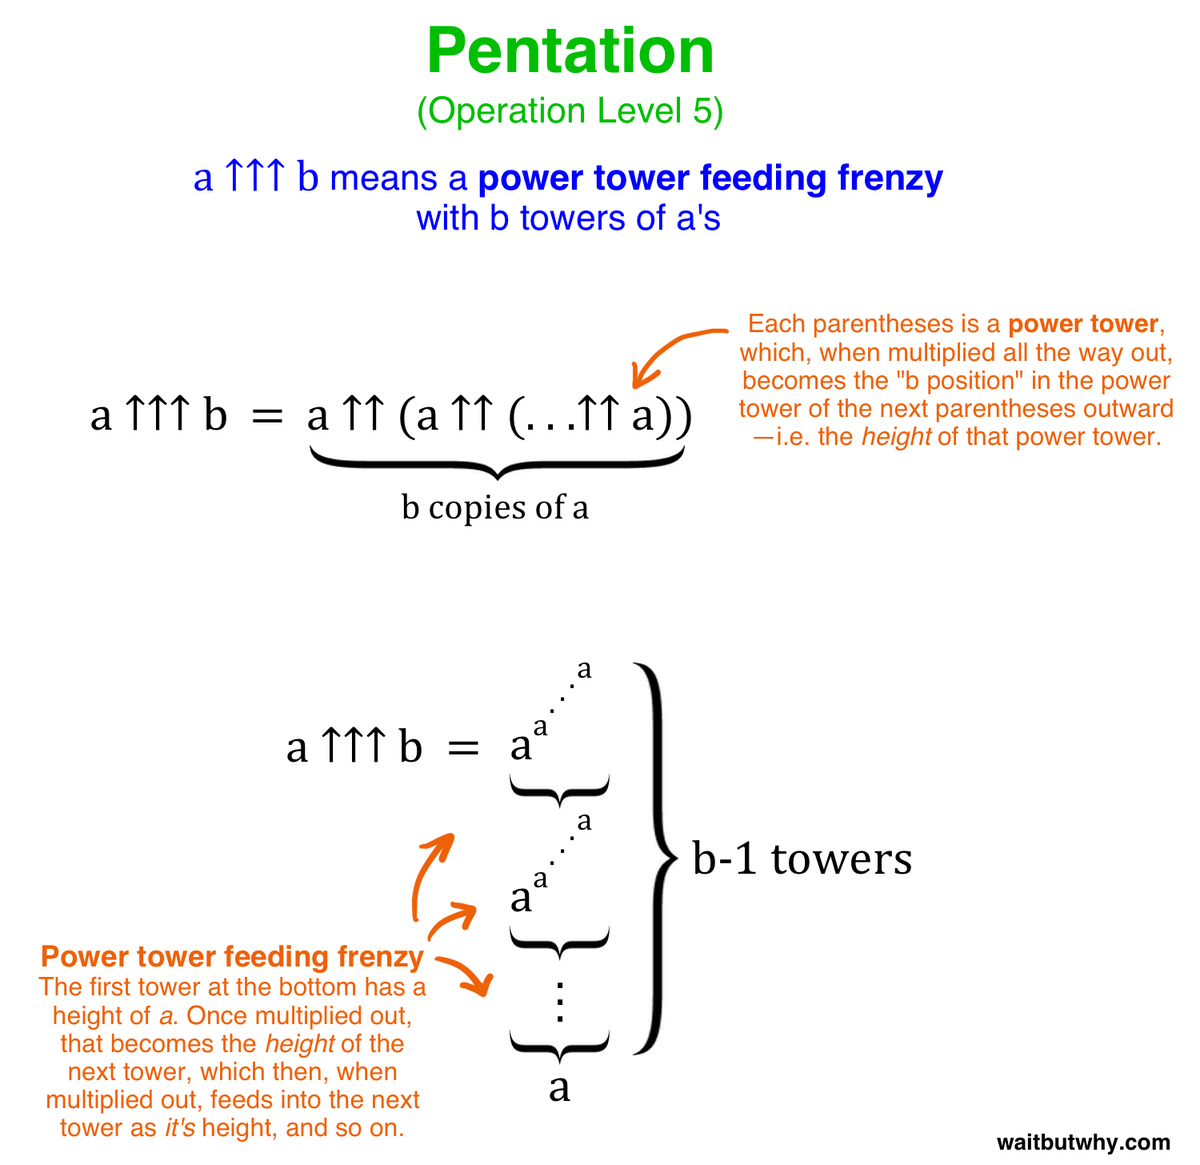 pentation-generally